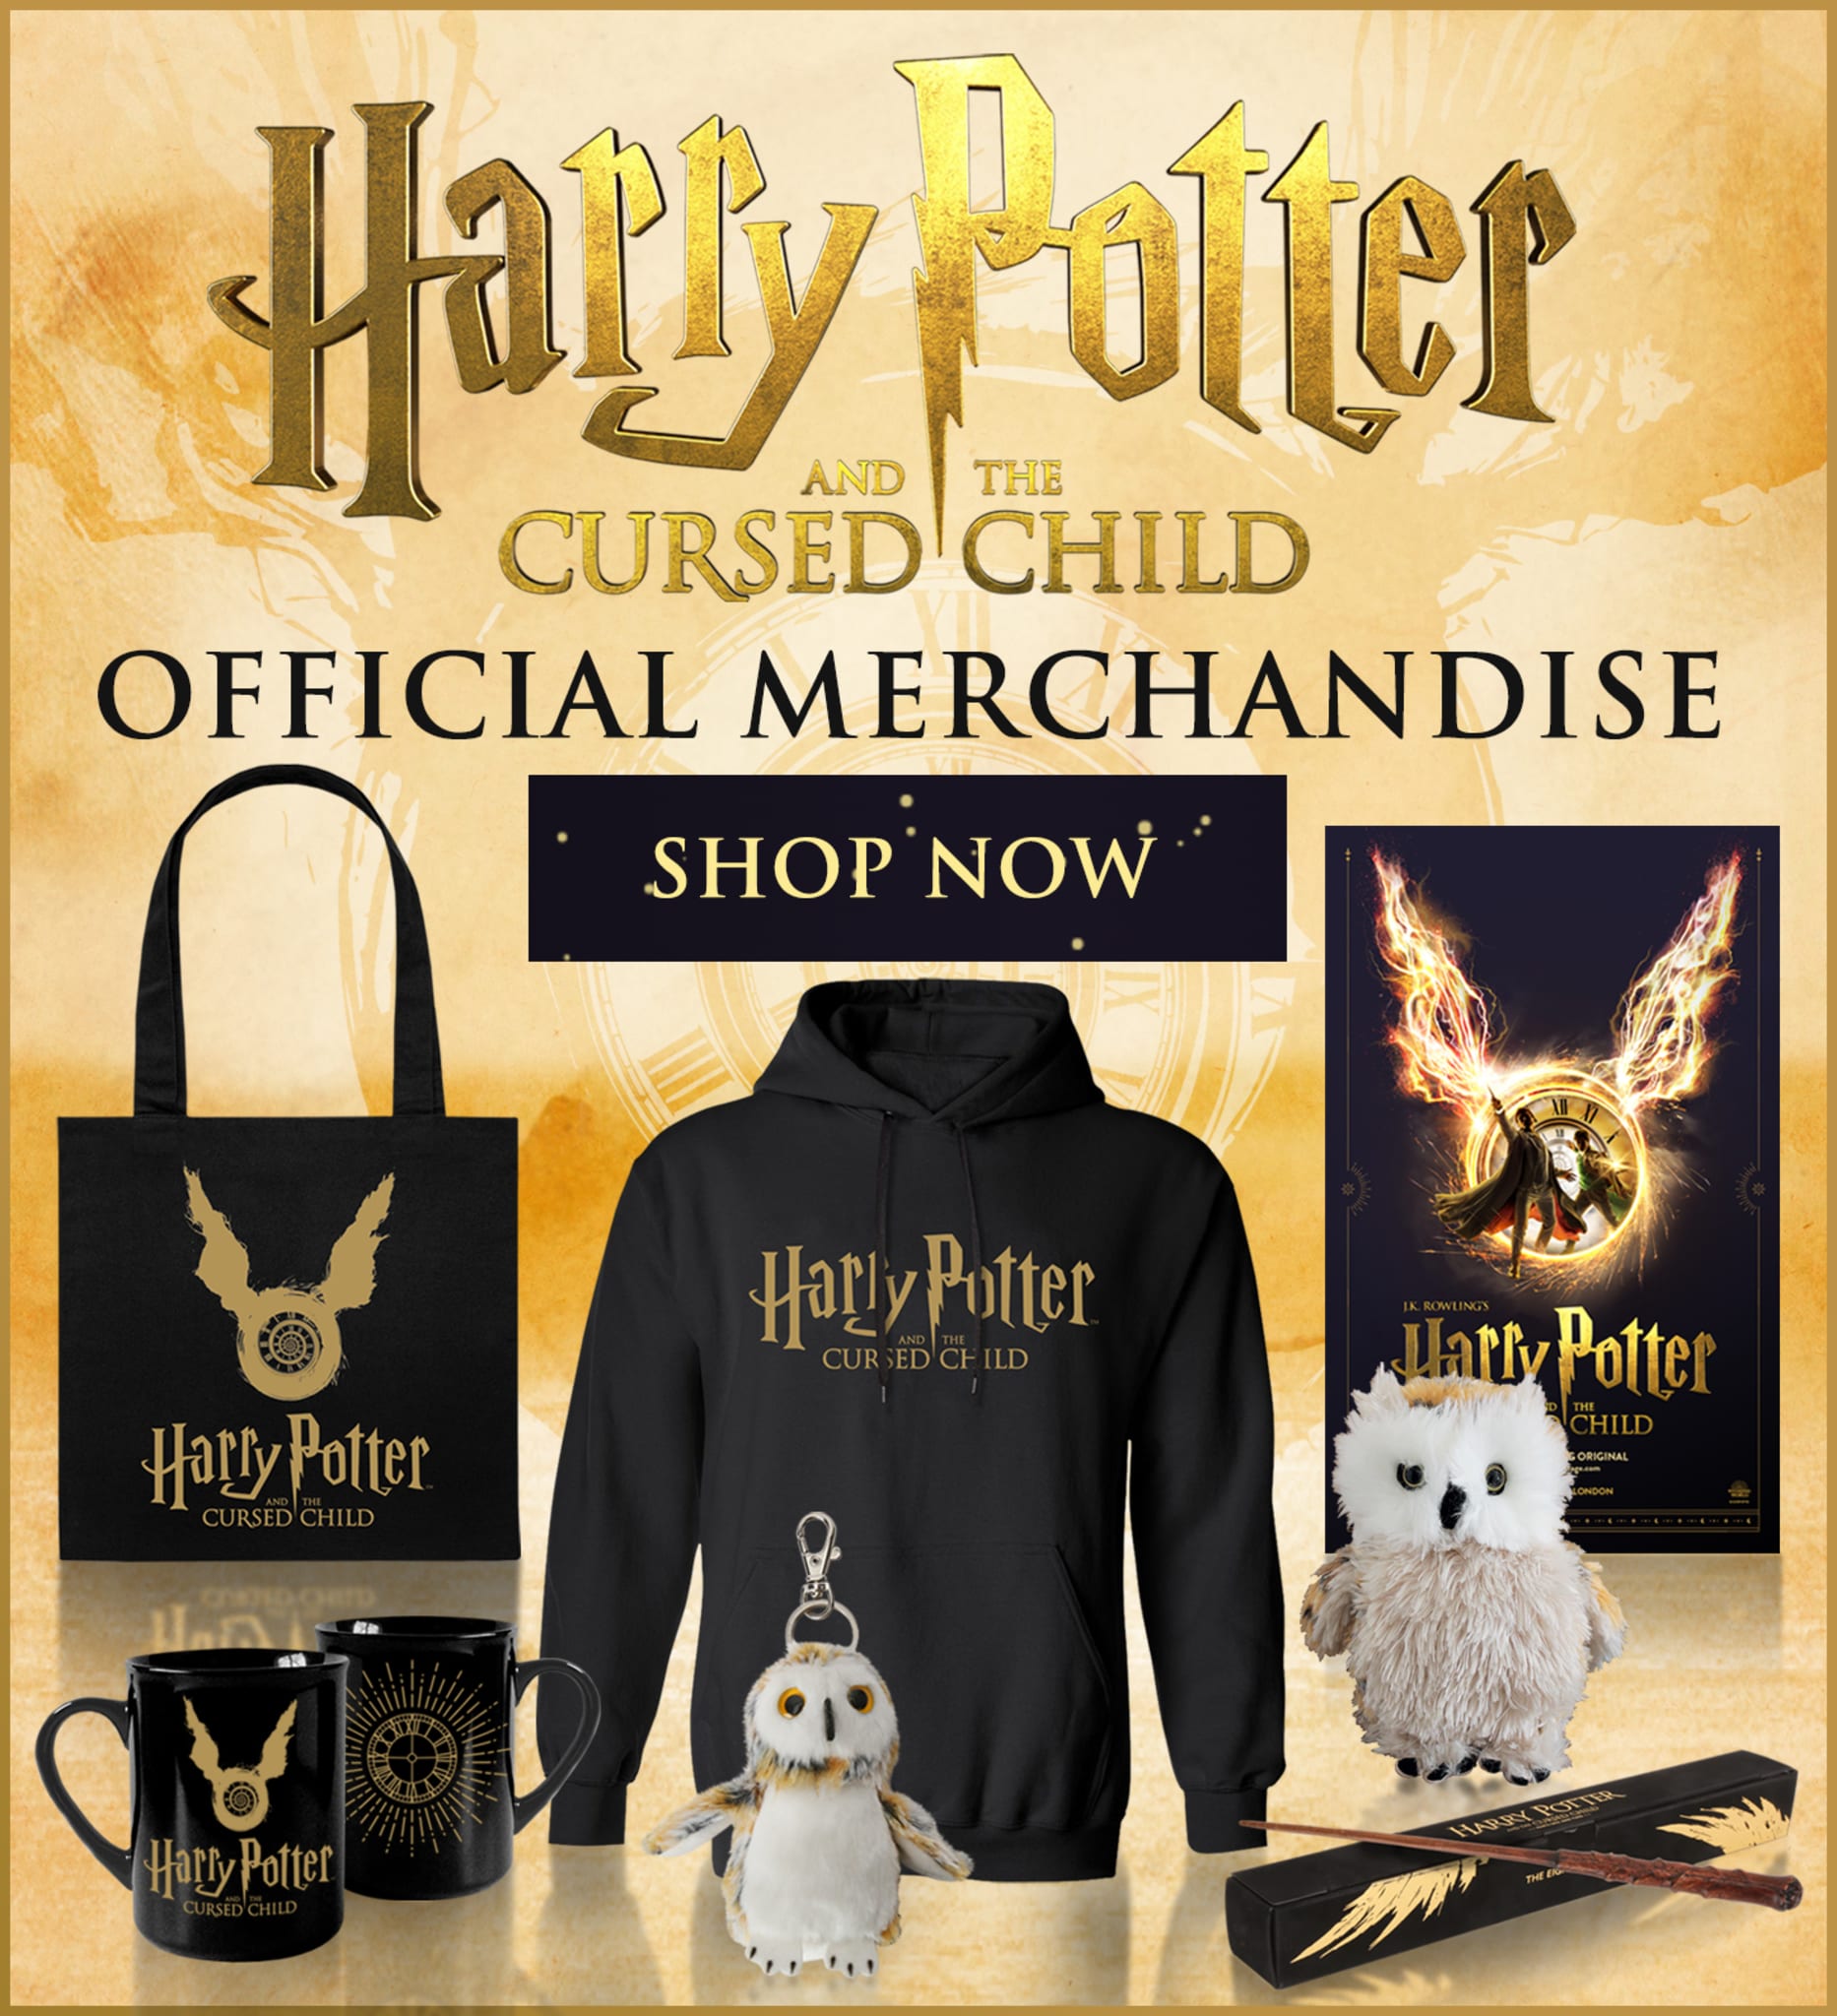 Potter the Child | London Merchandise Store